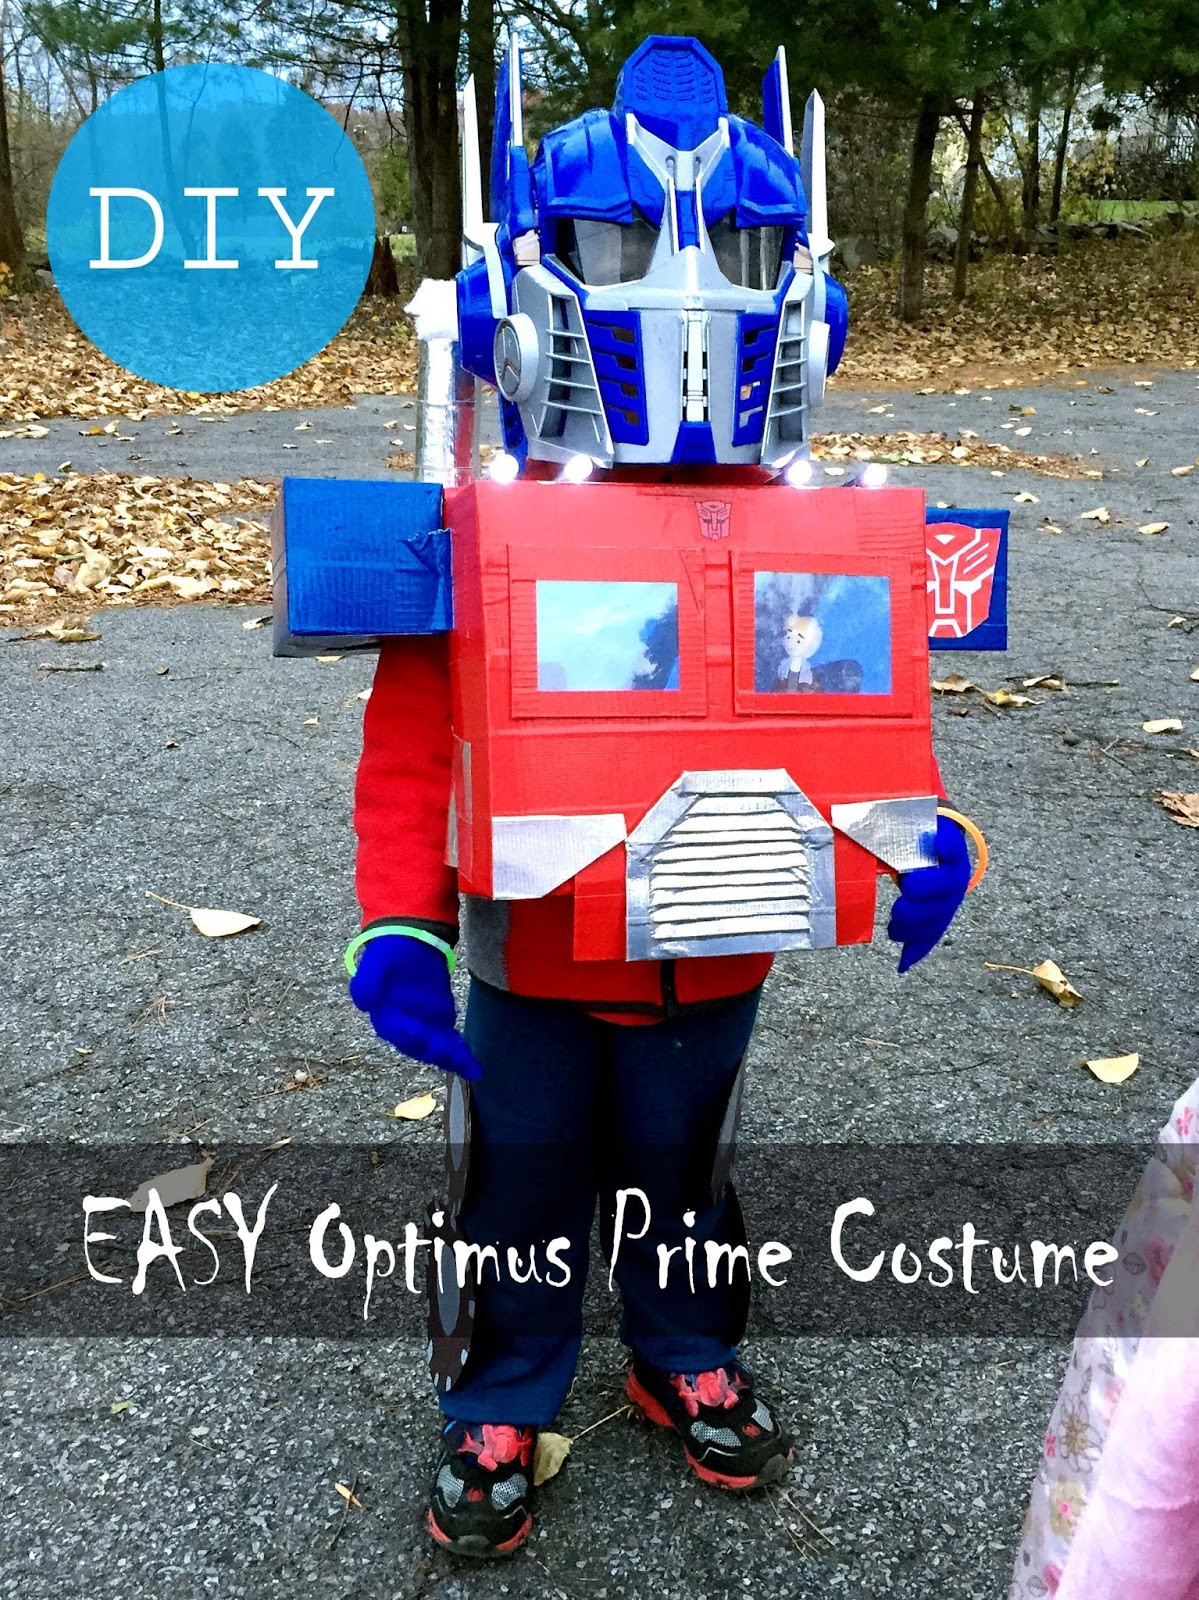 DIY Transformers Costumes
 buckley journal EASY DIY Optimus Prime Costume Rescue Bots